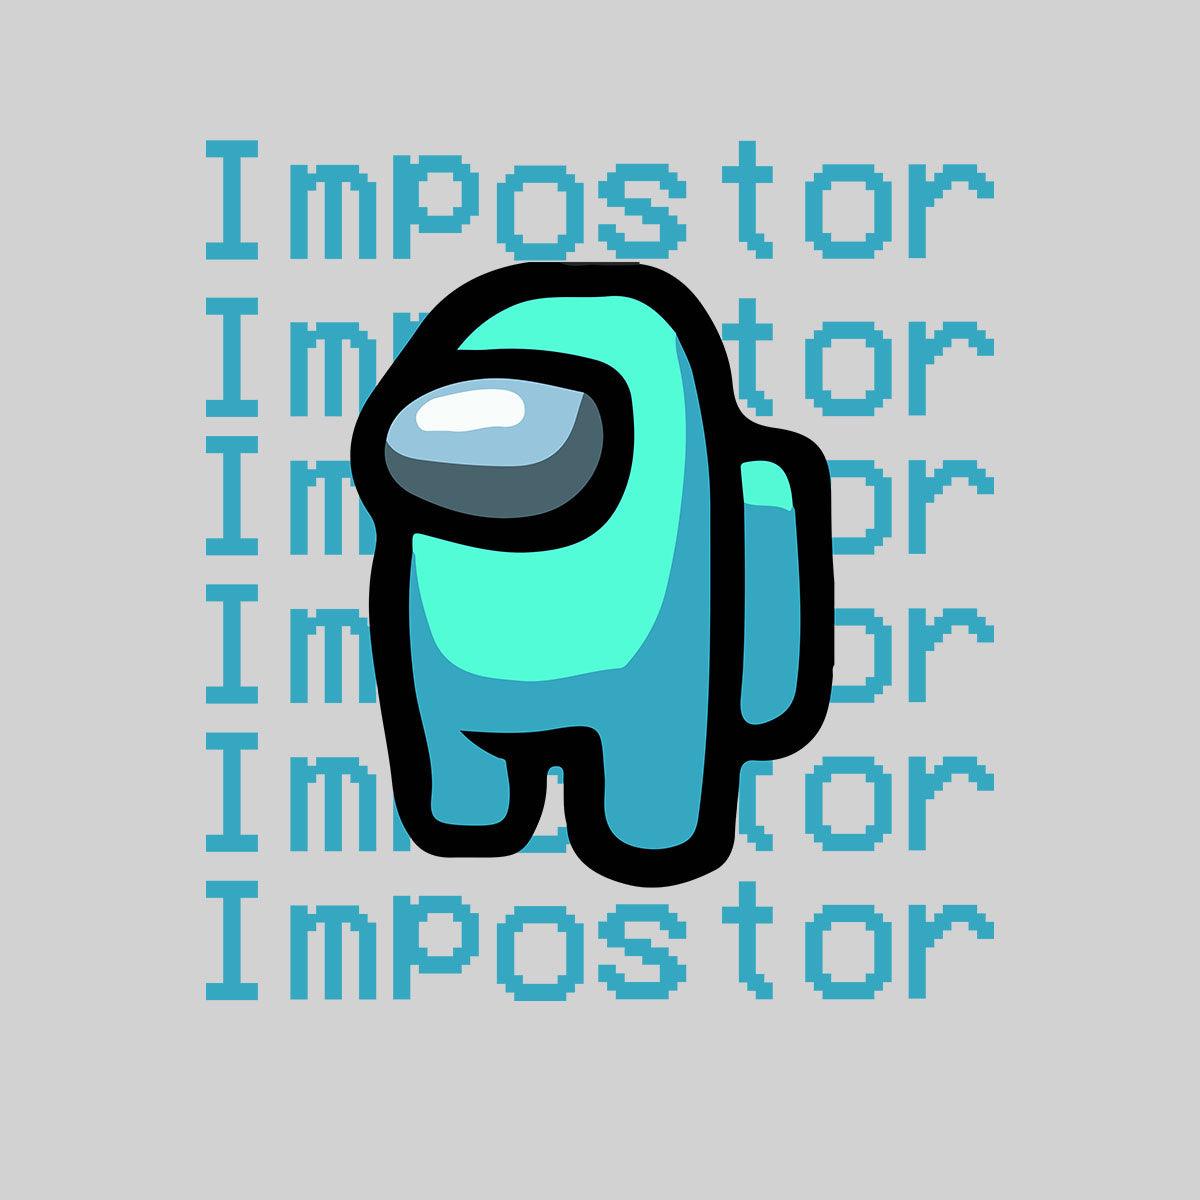 Impostor Among Us Gamer Male Tee Xmas Funny Light Blue Viral Game Retro Unisex T-Shirt - Kuzi Tees